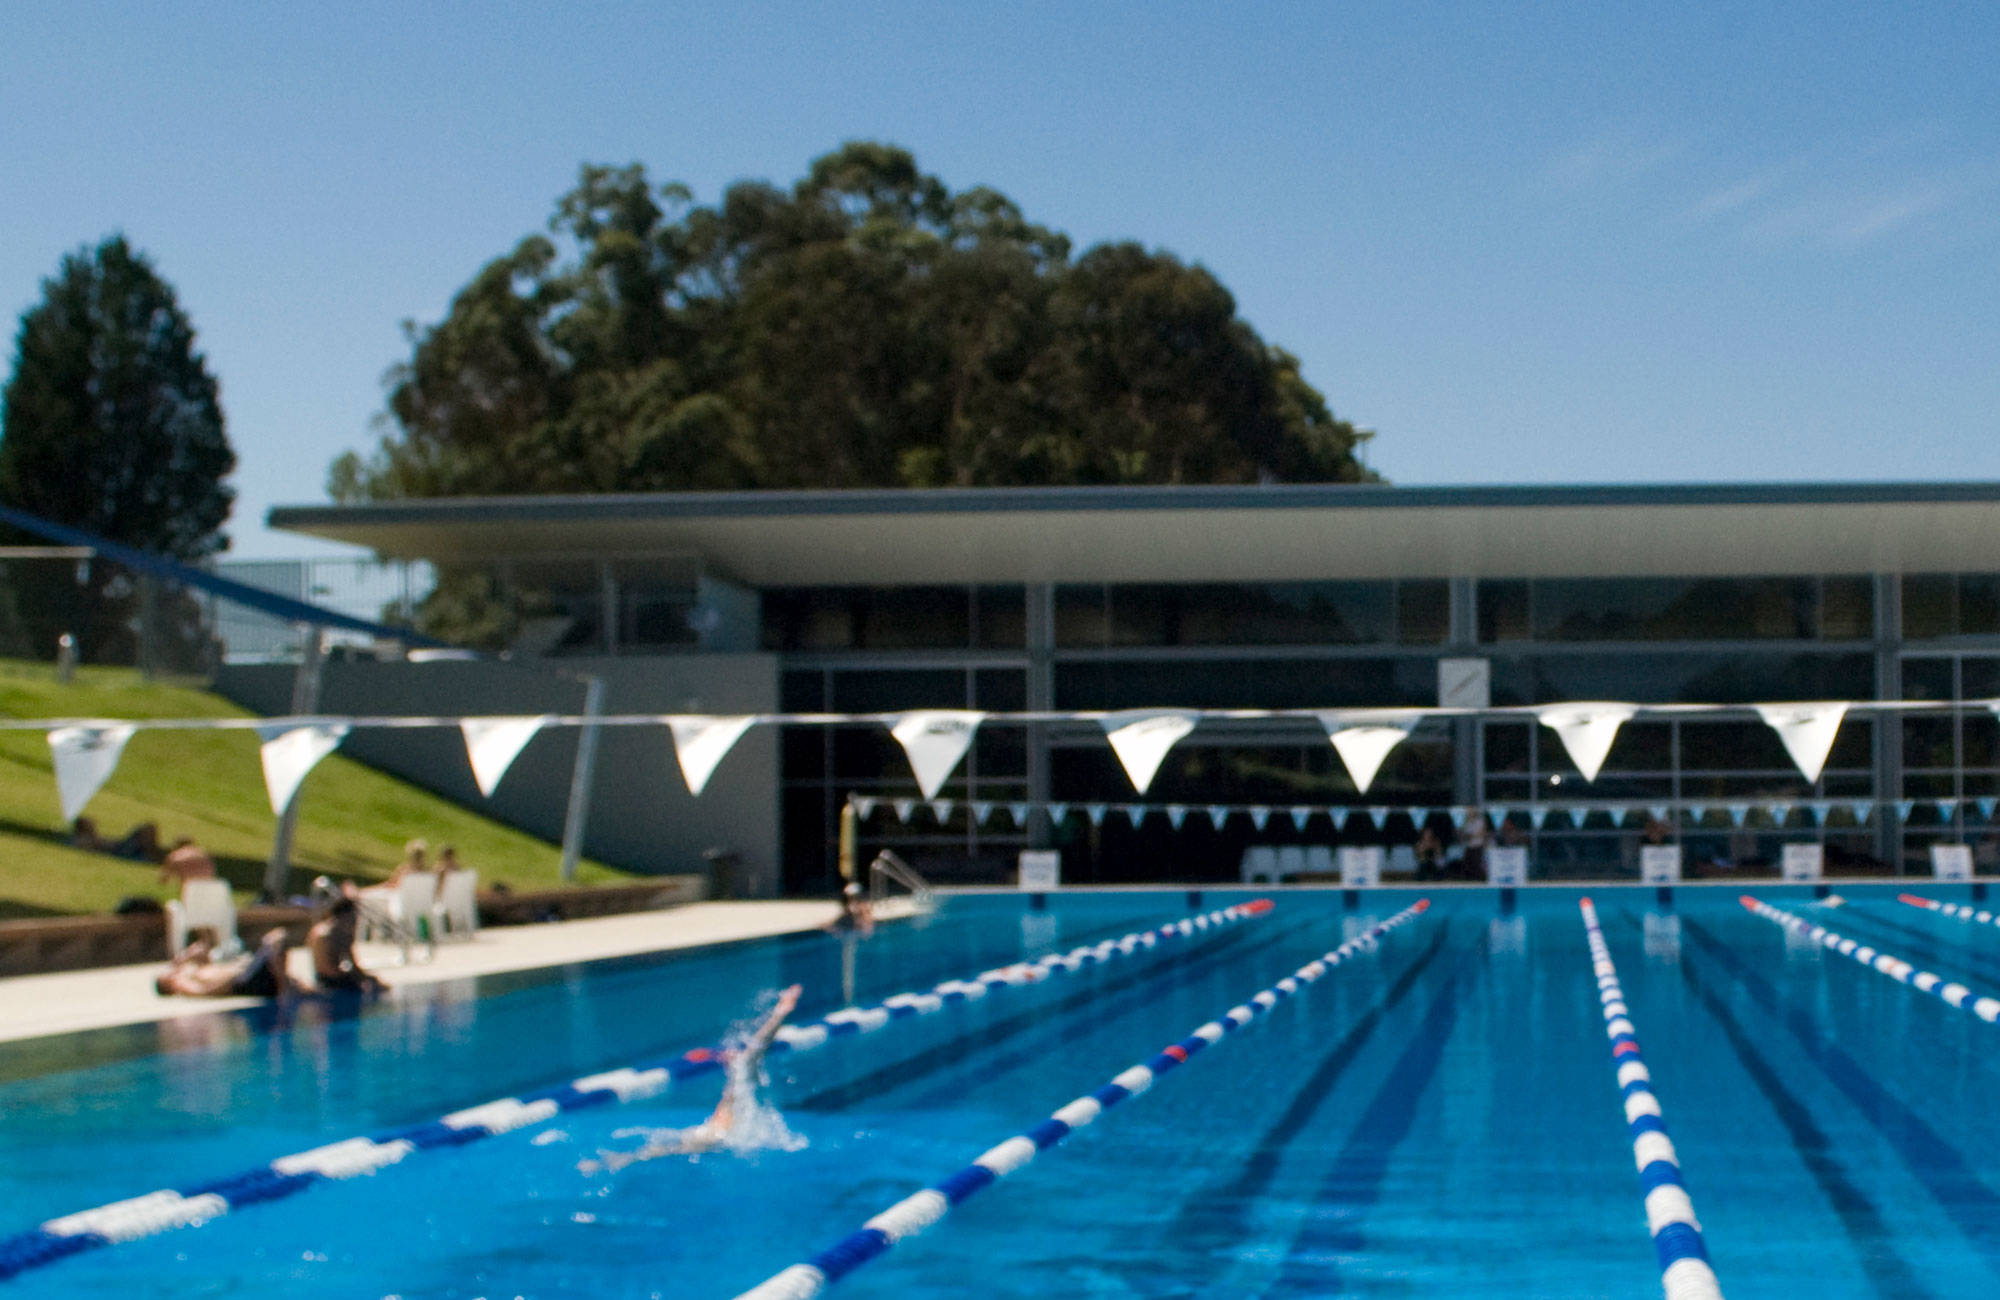 Macquarie University Swimmingpool